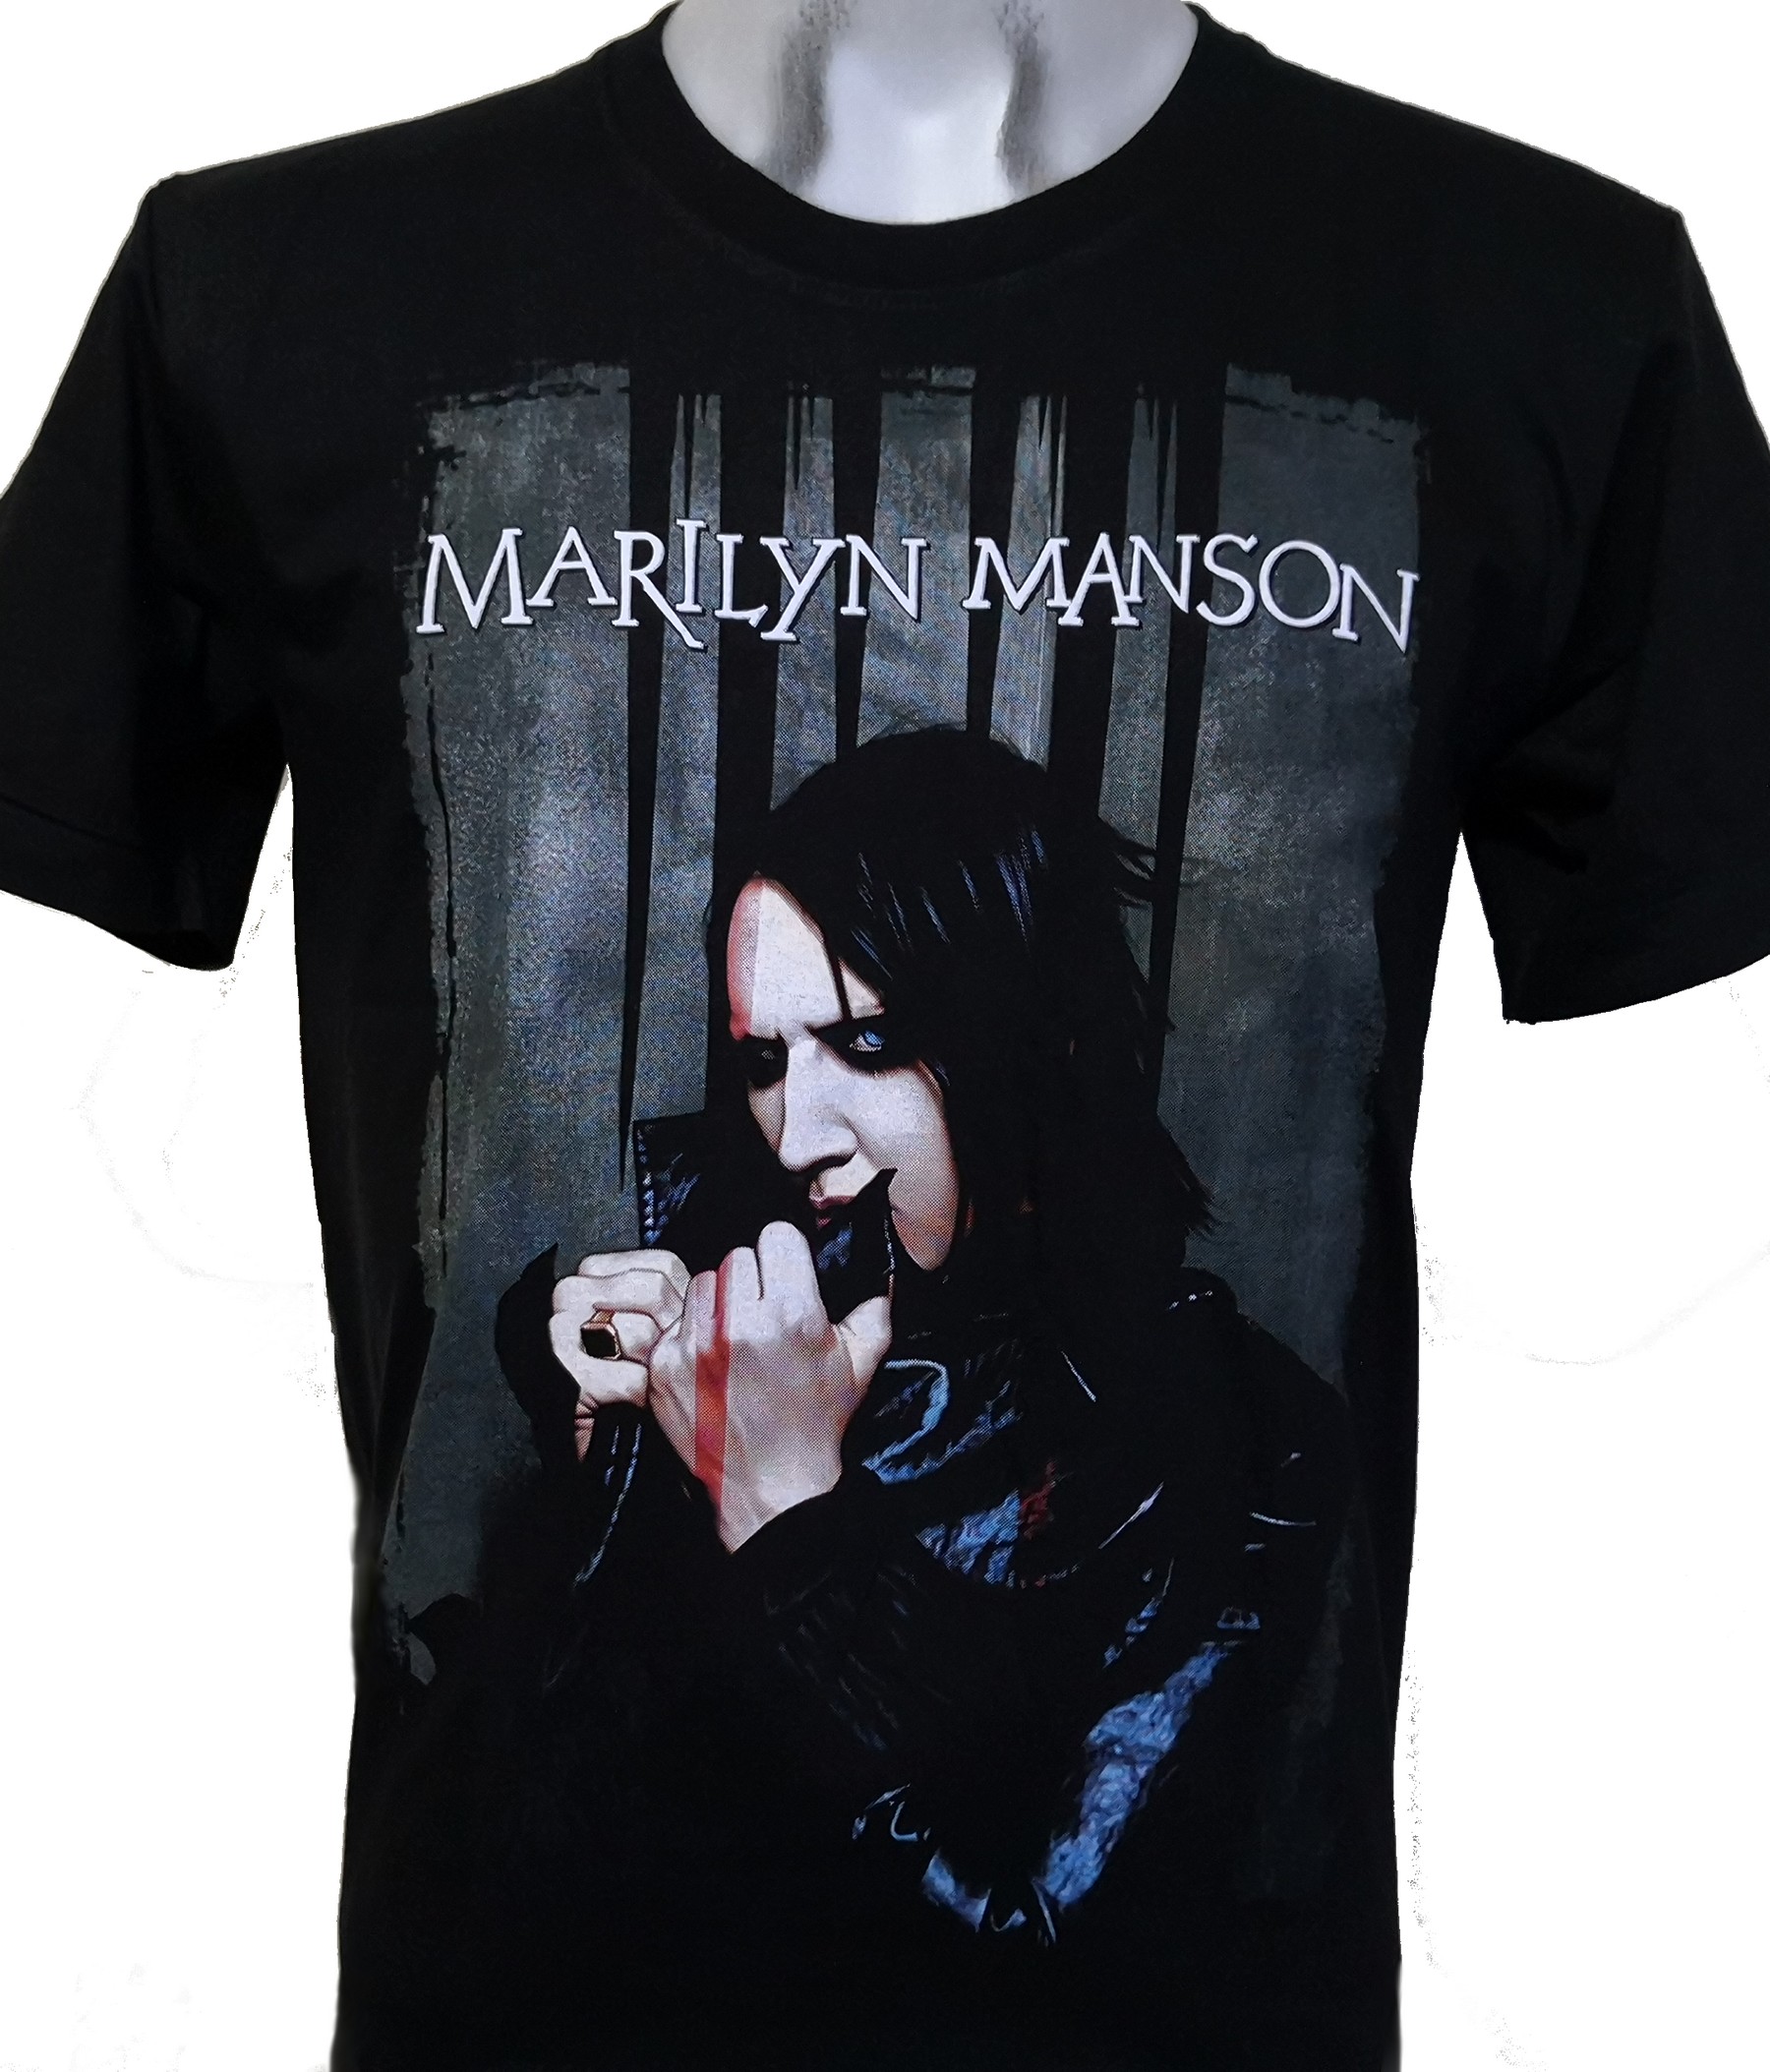 Marilyn Manson t-shirt size S